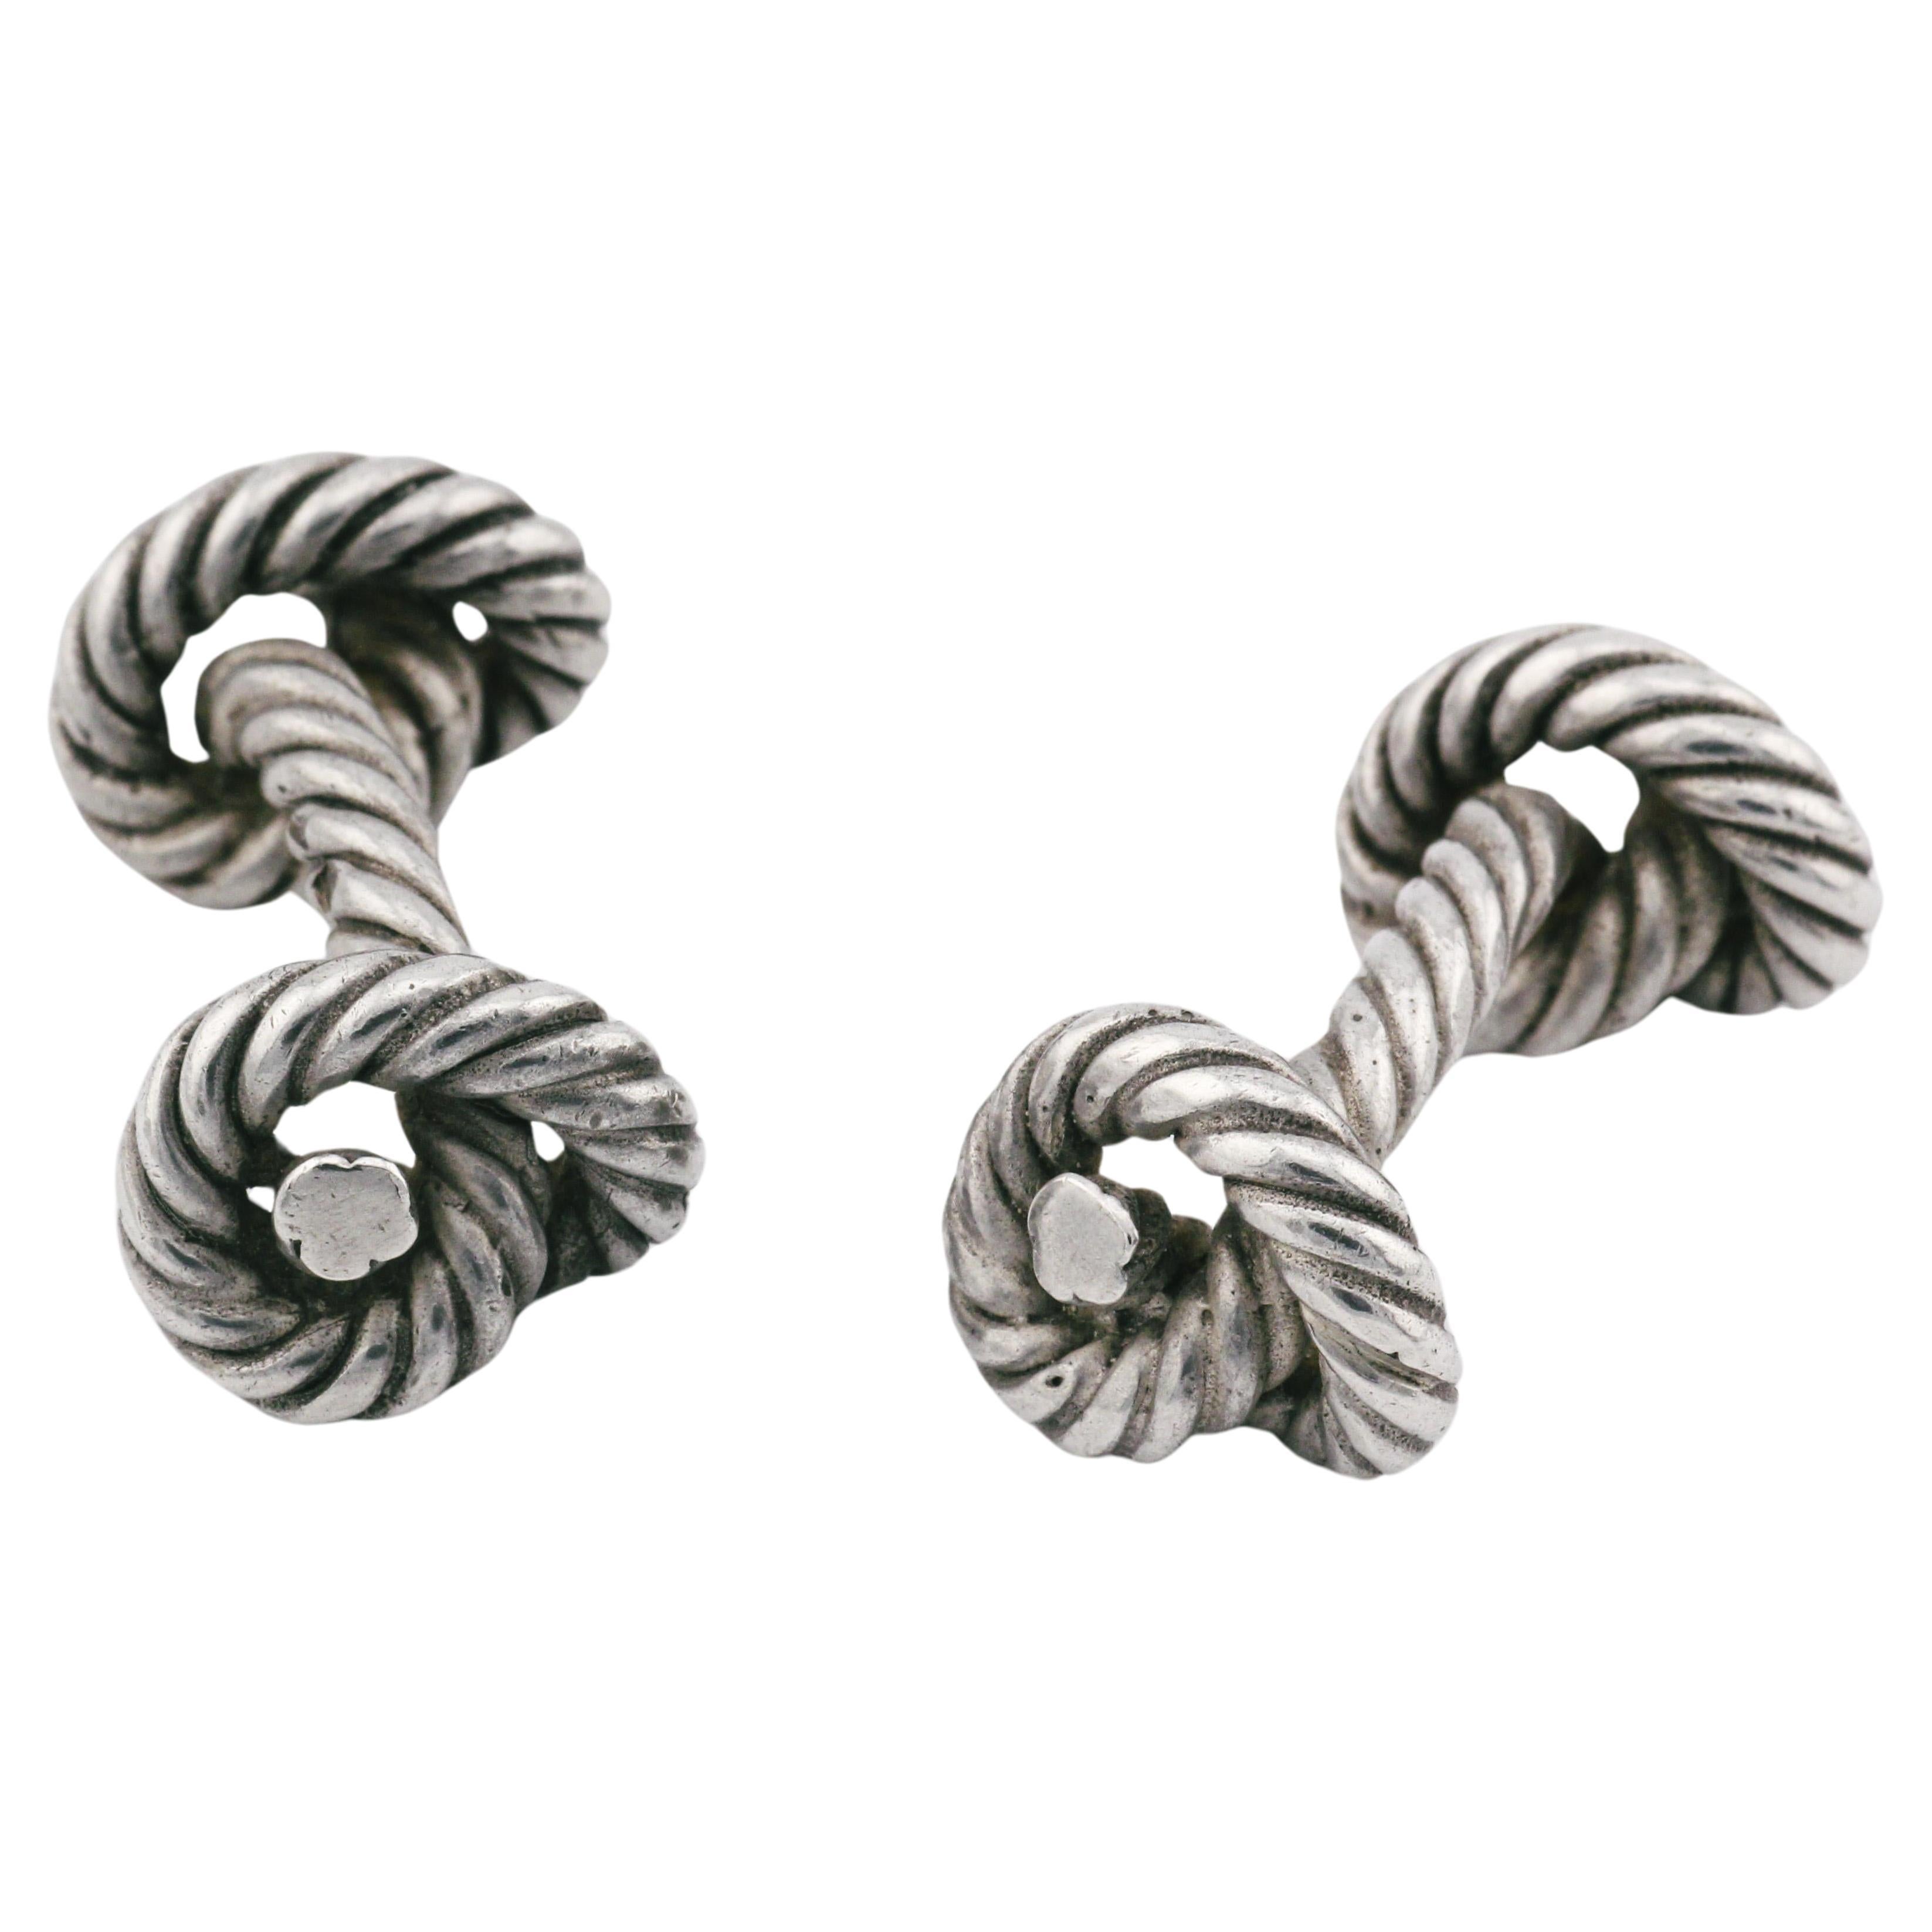 How do I use knot cufflinks?